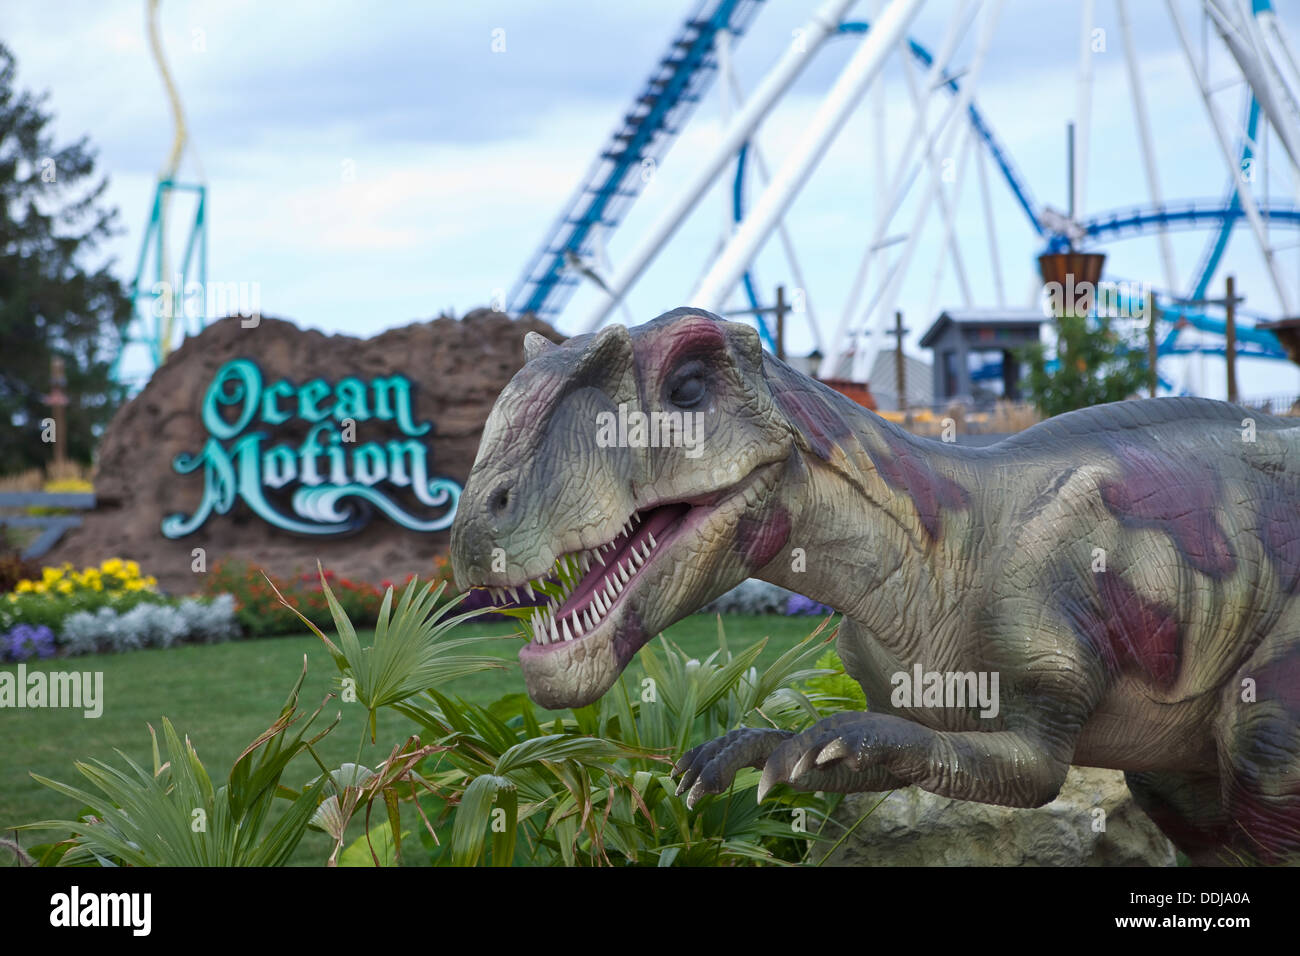 Cedar Point amusement park is pictured in Sandusky, Ohio Stock Photo